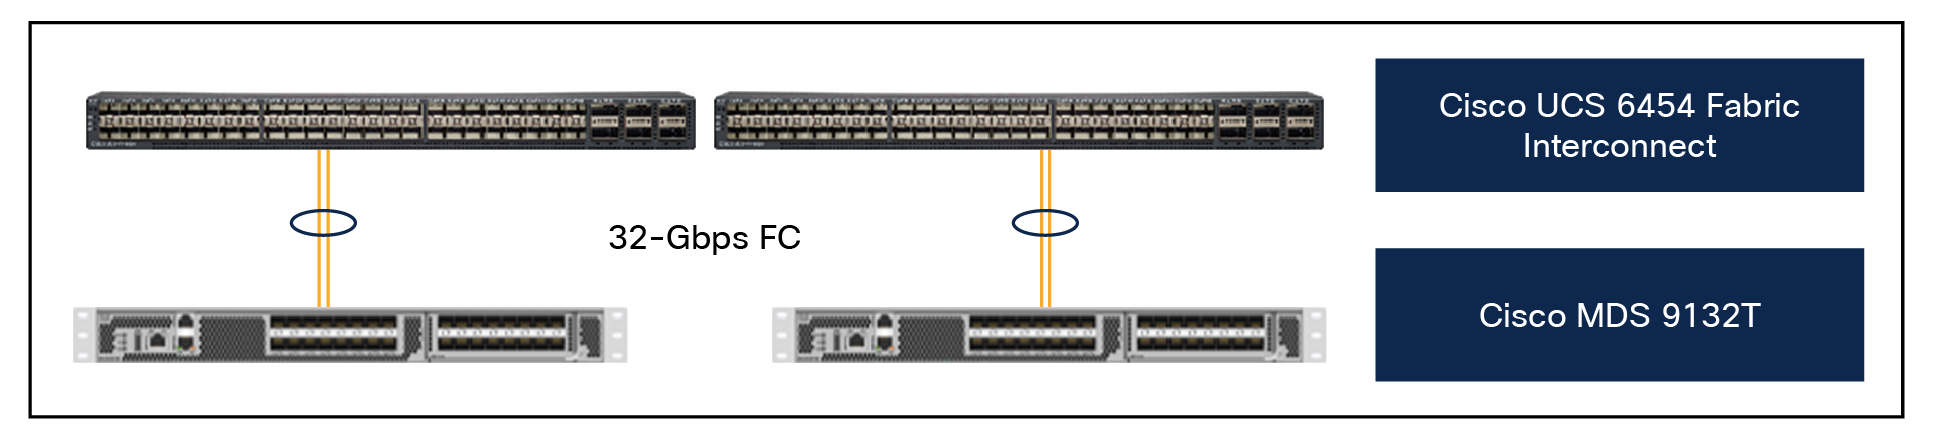 Cisco UCS 6454 Fabric Interconnect Fibre Channel (FC) connectivity